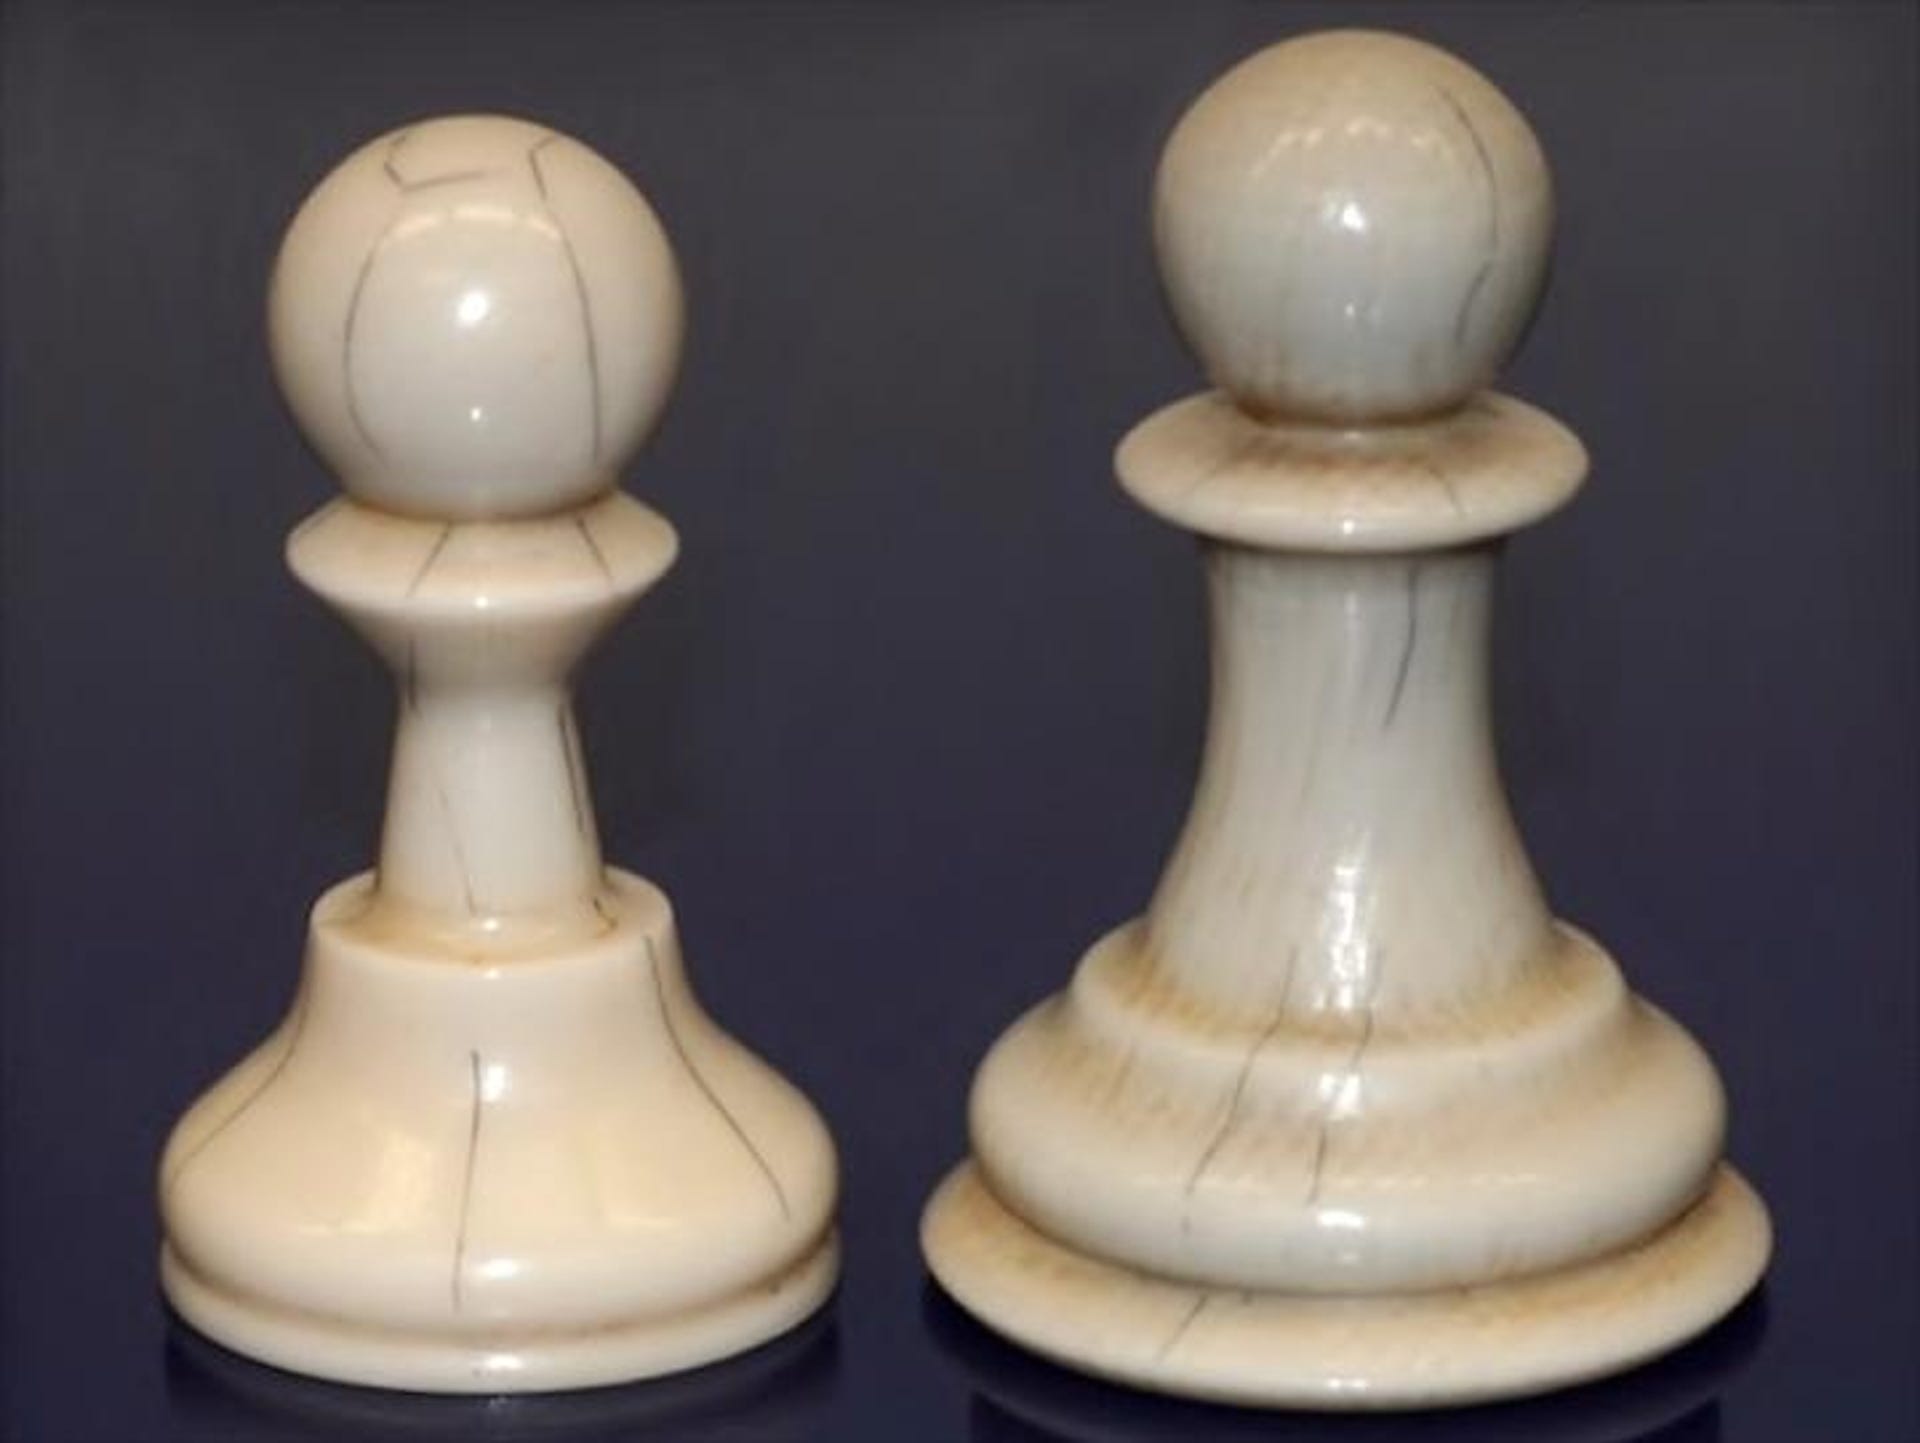 chesspieces